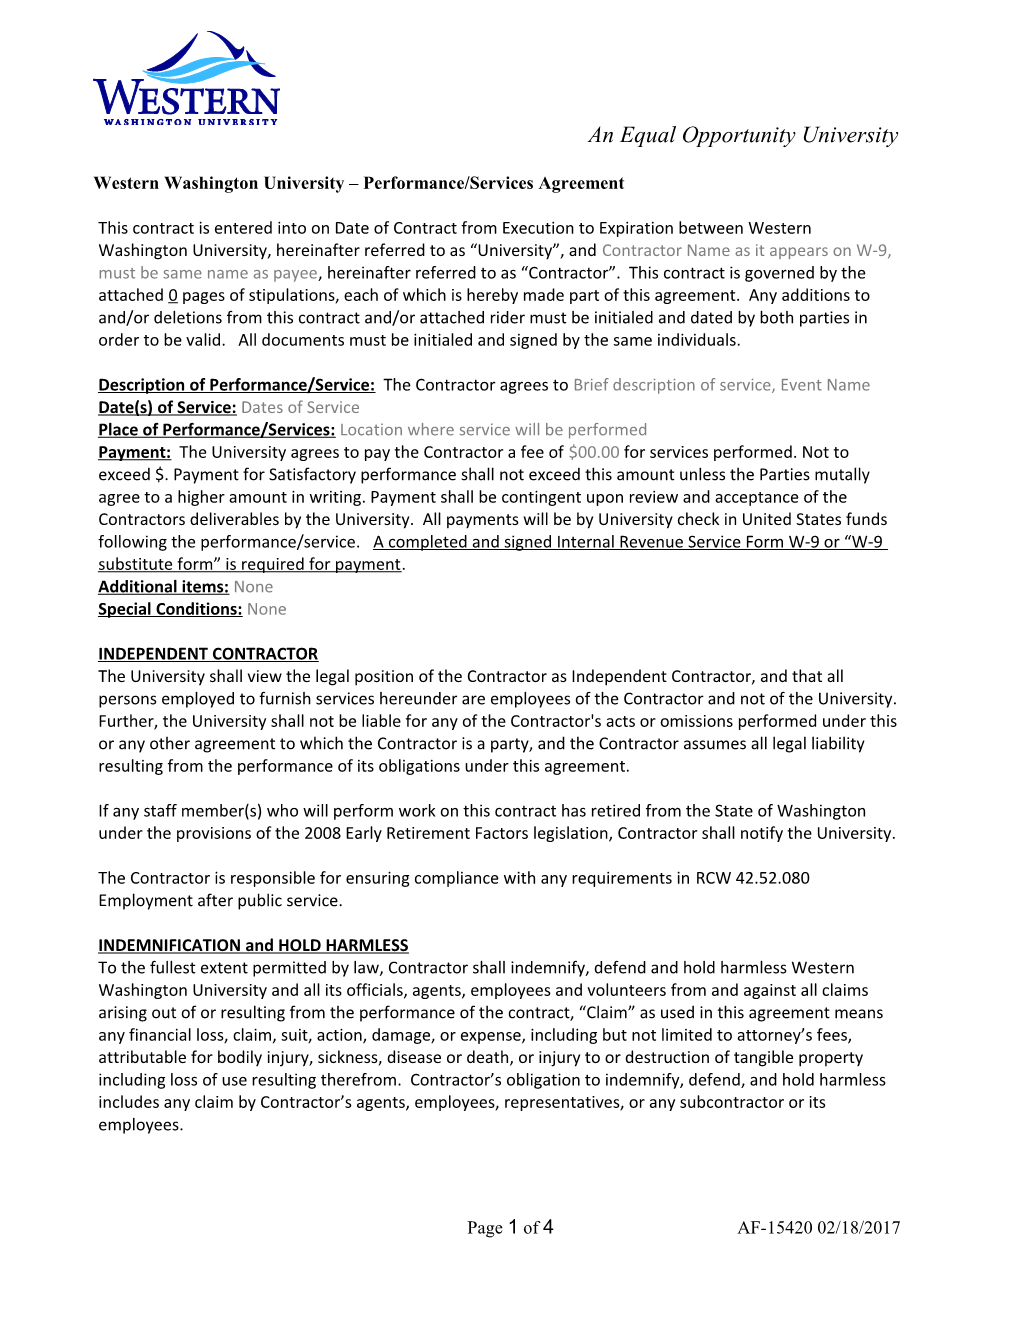 Western Washington University Performance/Services Agreement